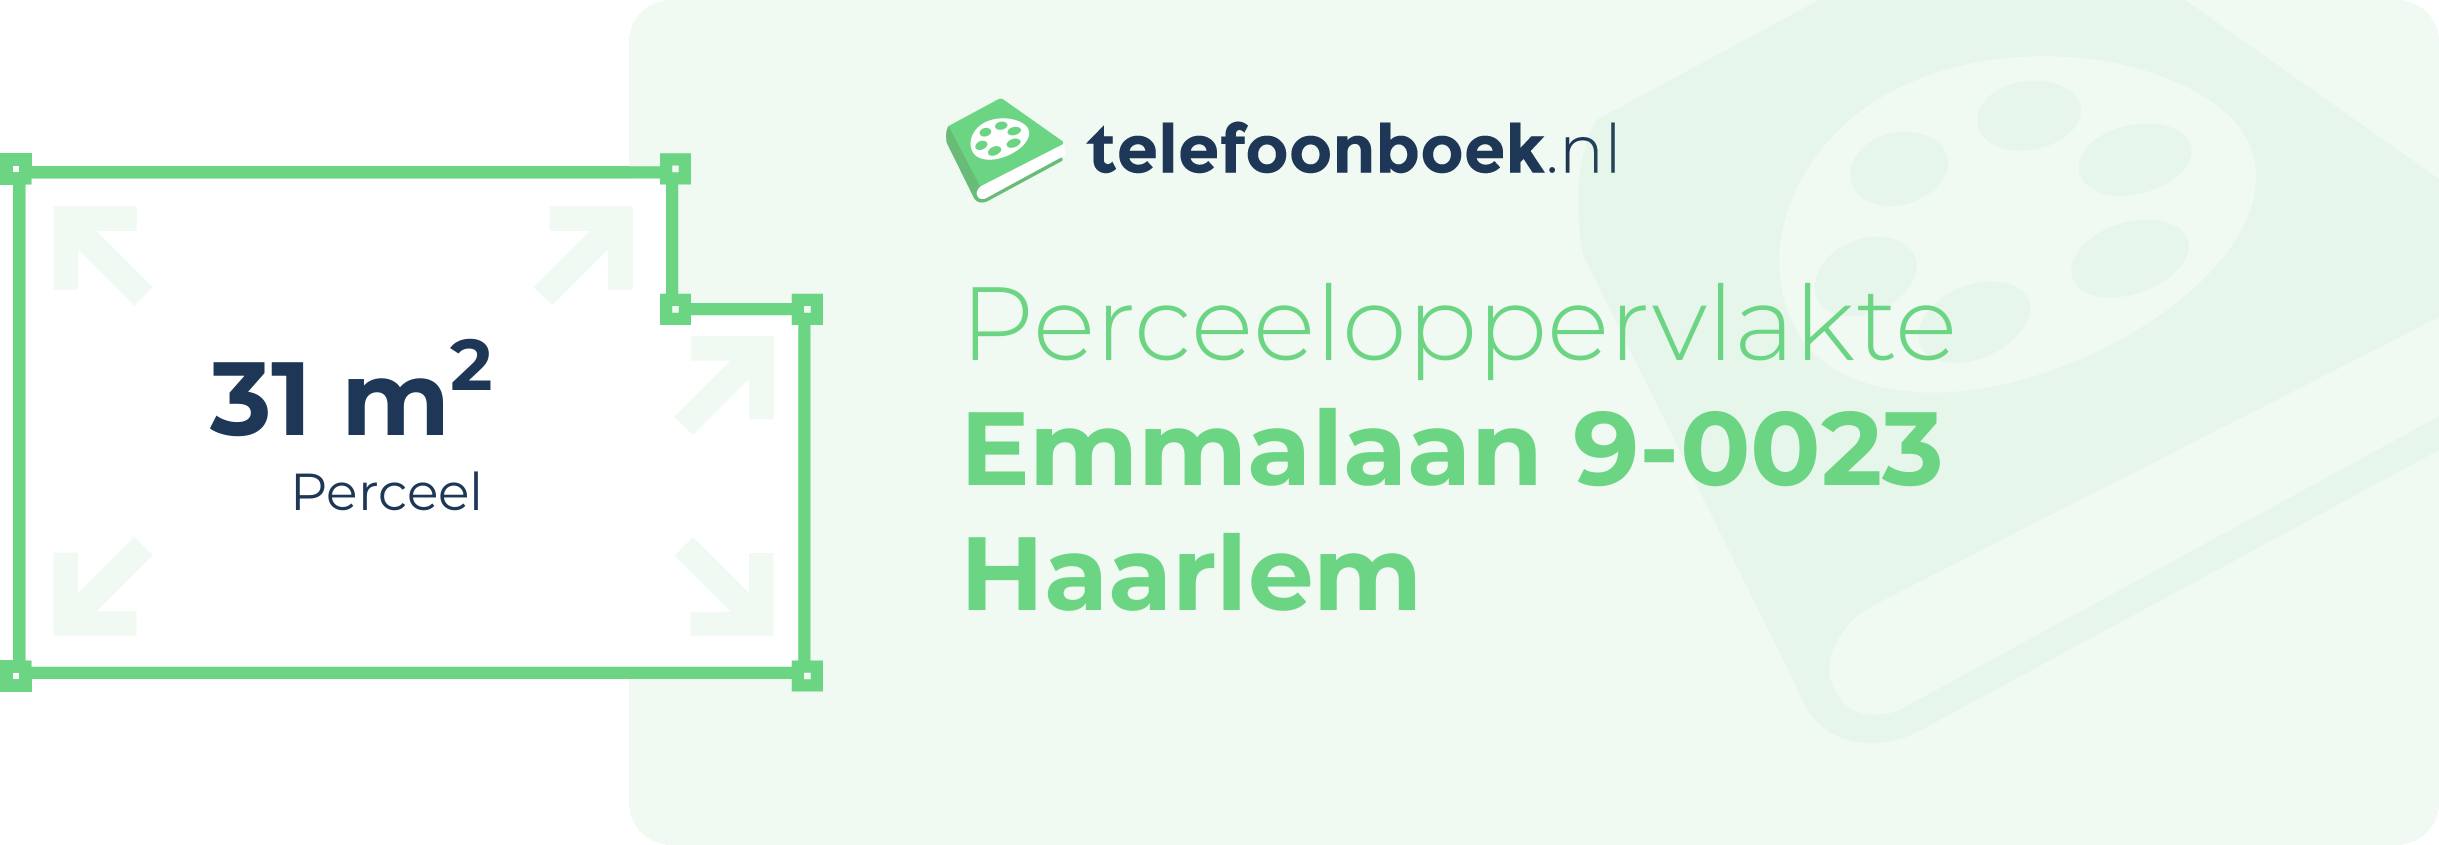 Perceeloppervlakte Emmalaan 9-0023 Haarlem